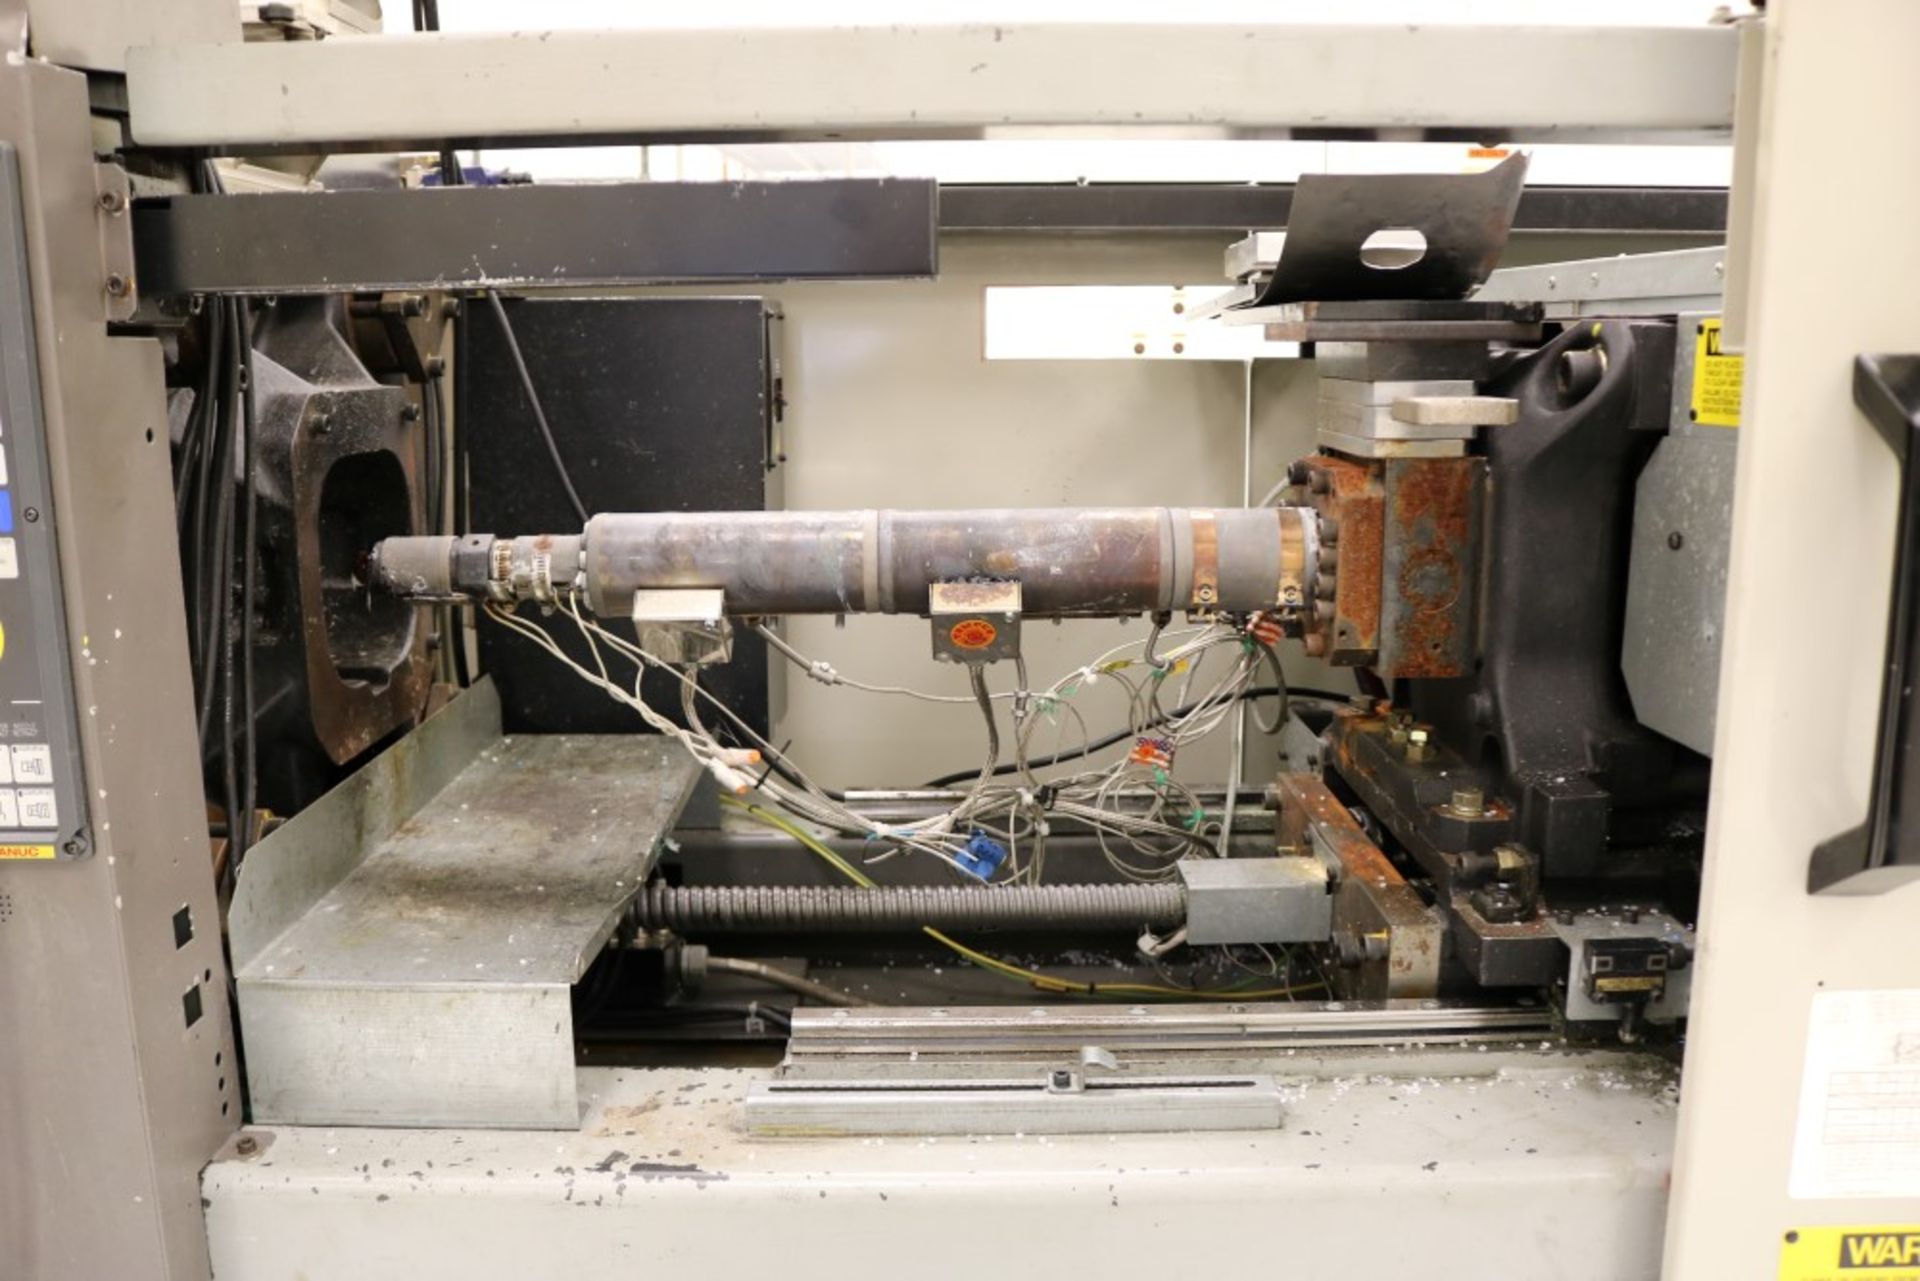 1998 Cincinnati Milacron Roboshot 55 ton Injection Molding Machine - 1.7 oz. Shot, Model Robo 55R- - Image 6 of 15